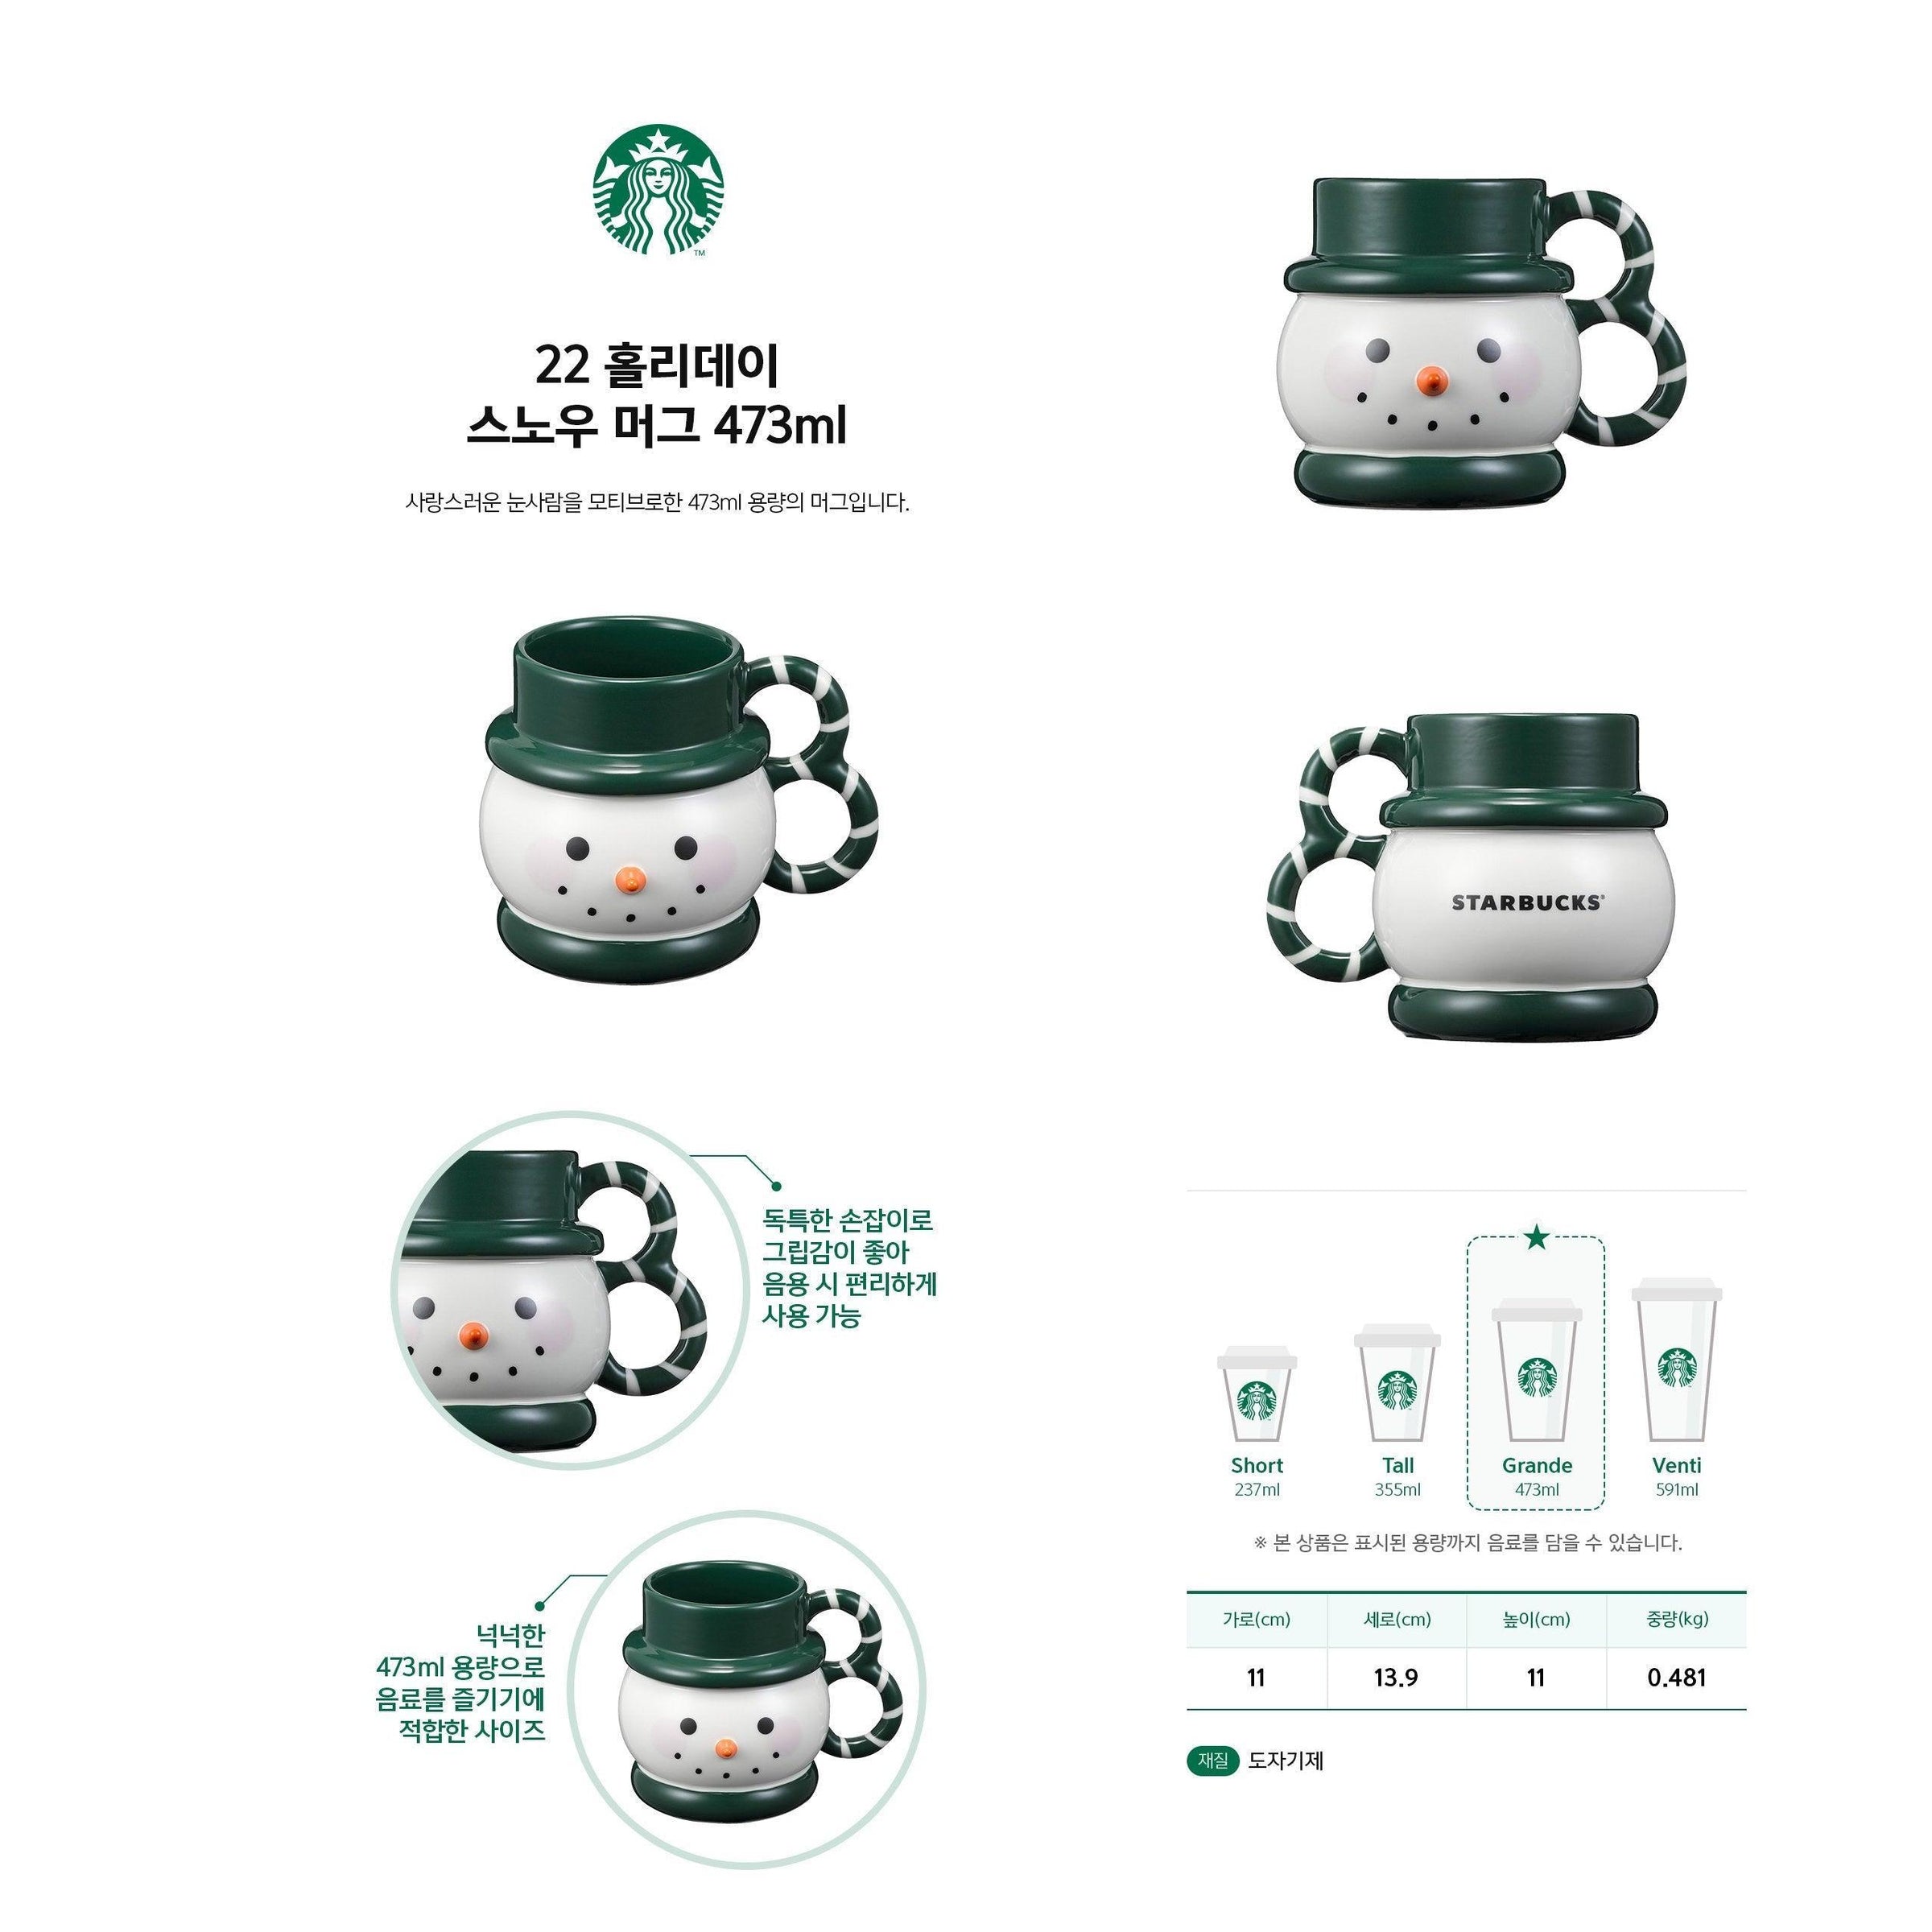 Ly Starbucks 22 Holiday Snow Mug - Kallos Vietnam